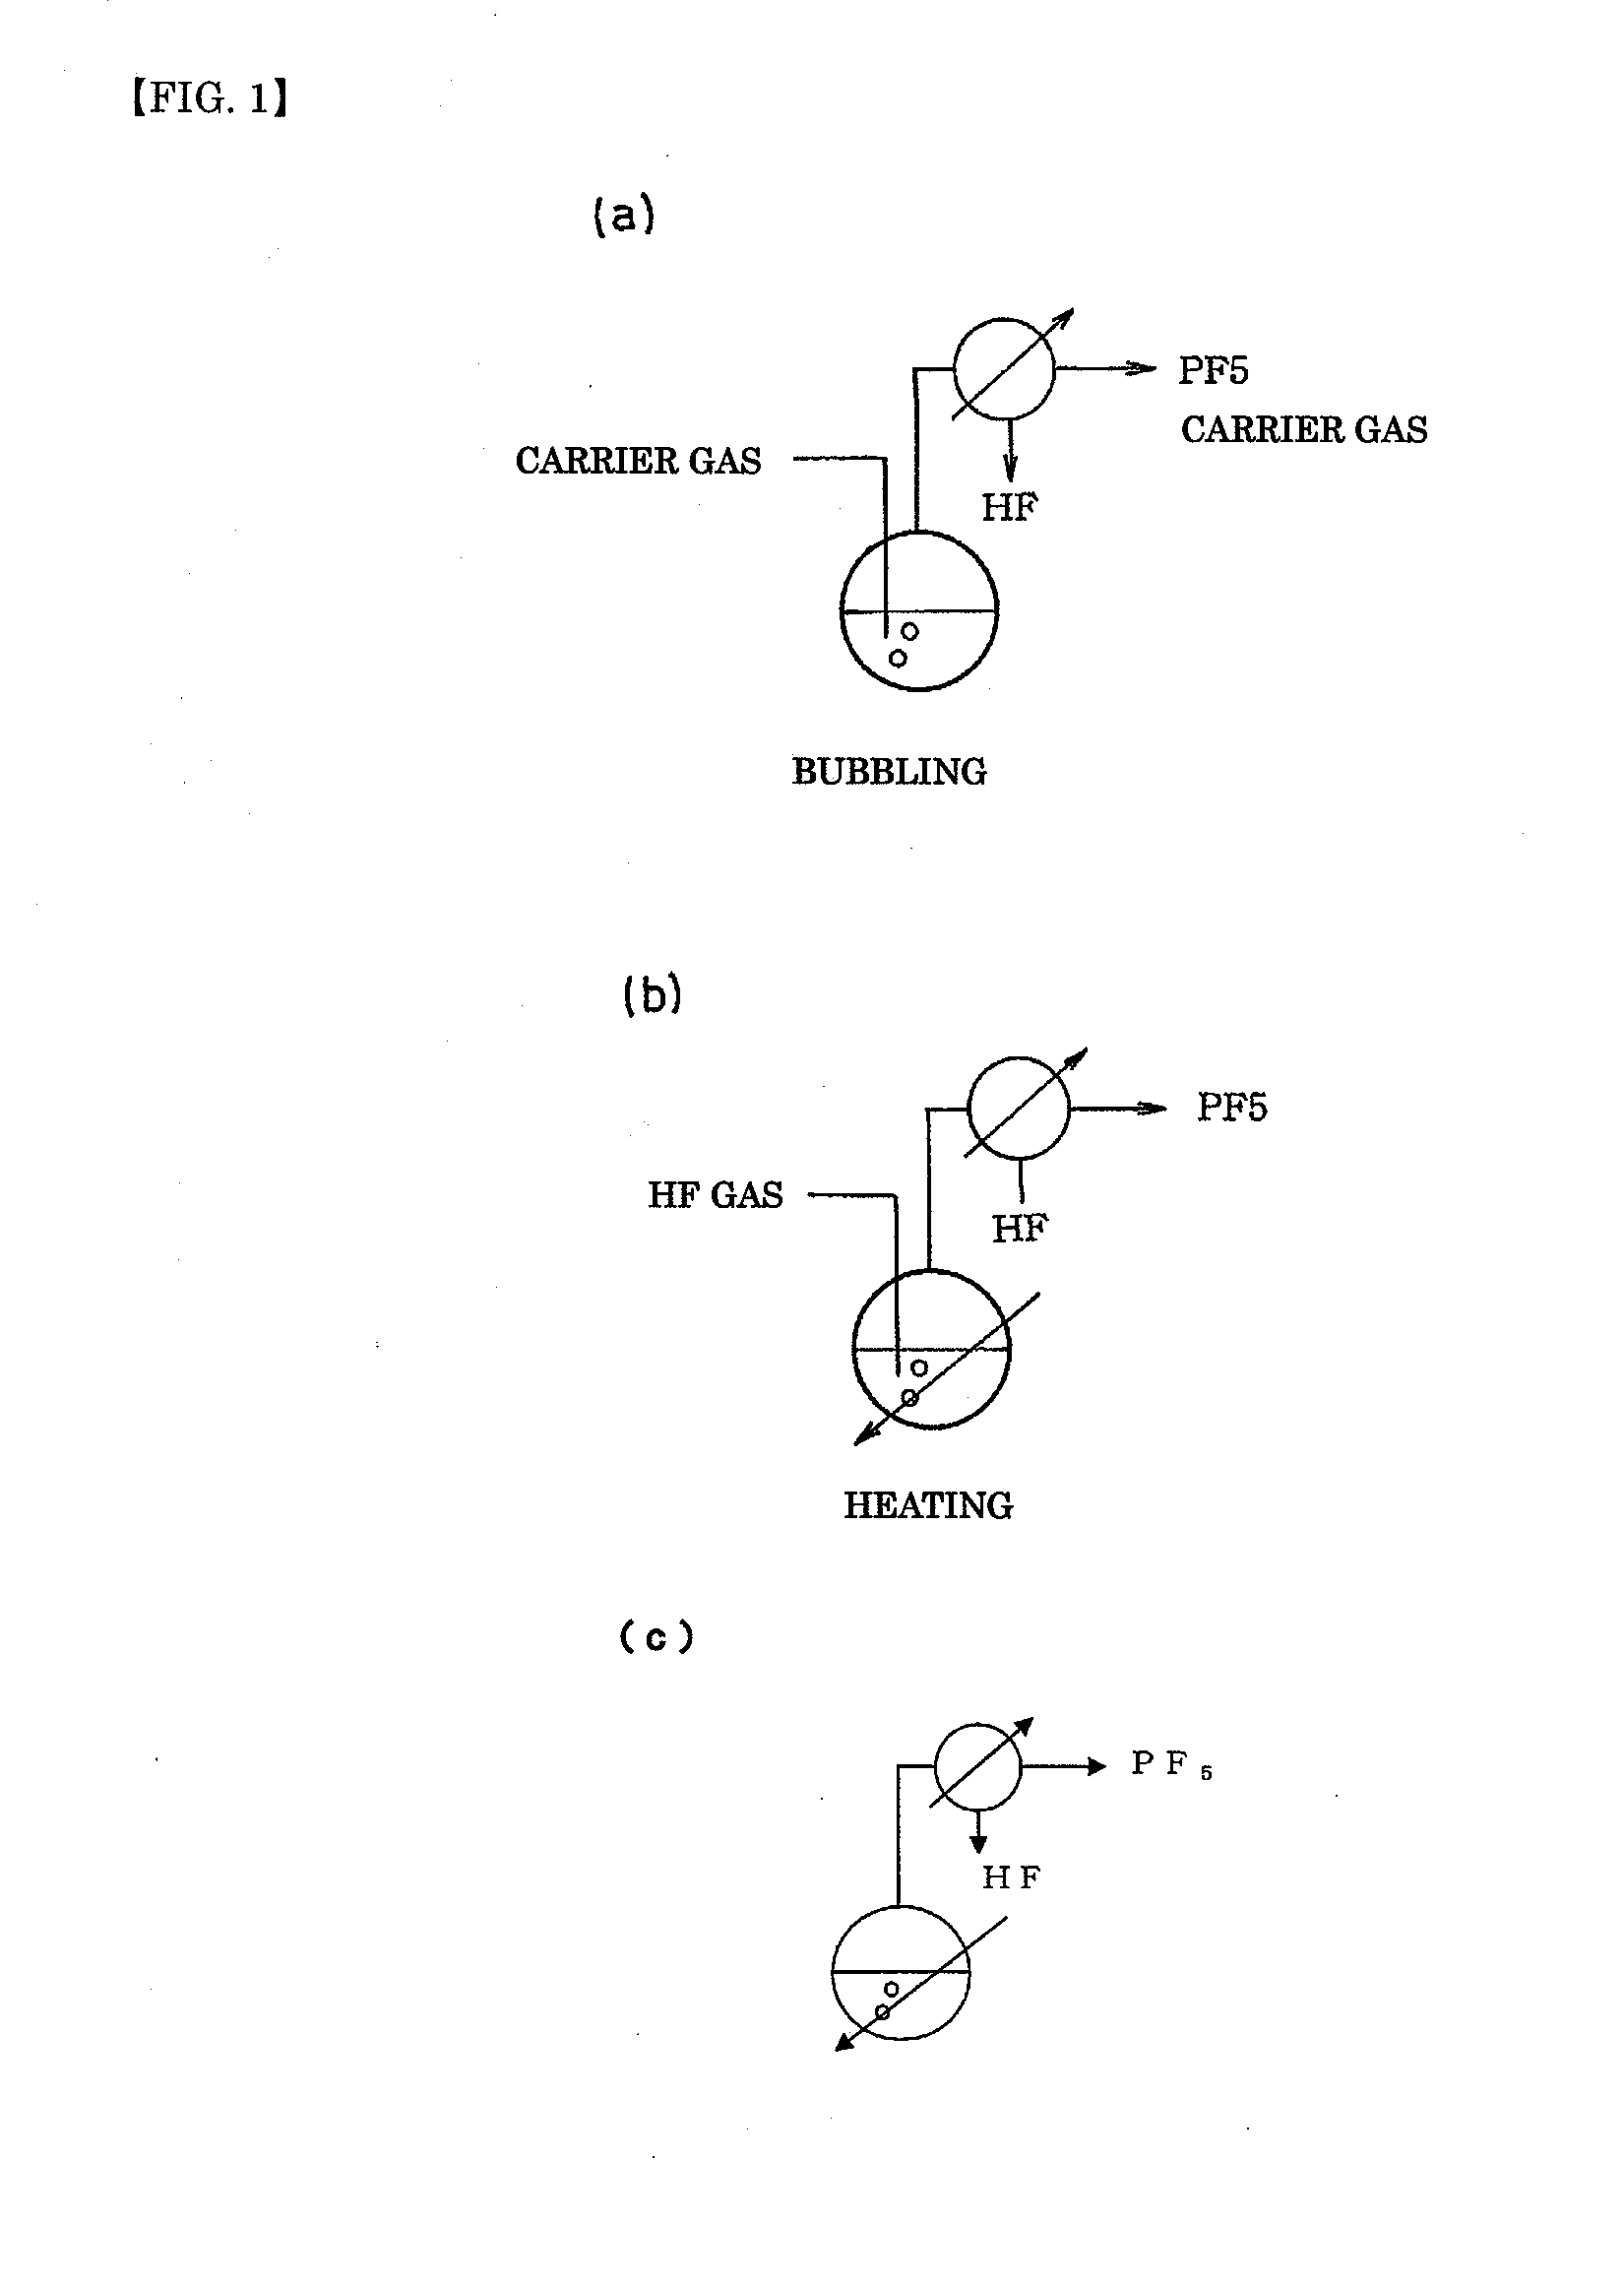 Processes for producing phosphorus tetrafluoride and phosphate hexafluoride